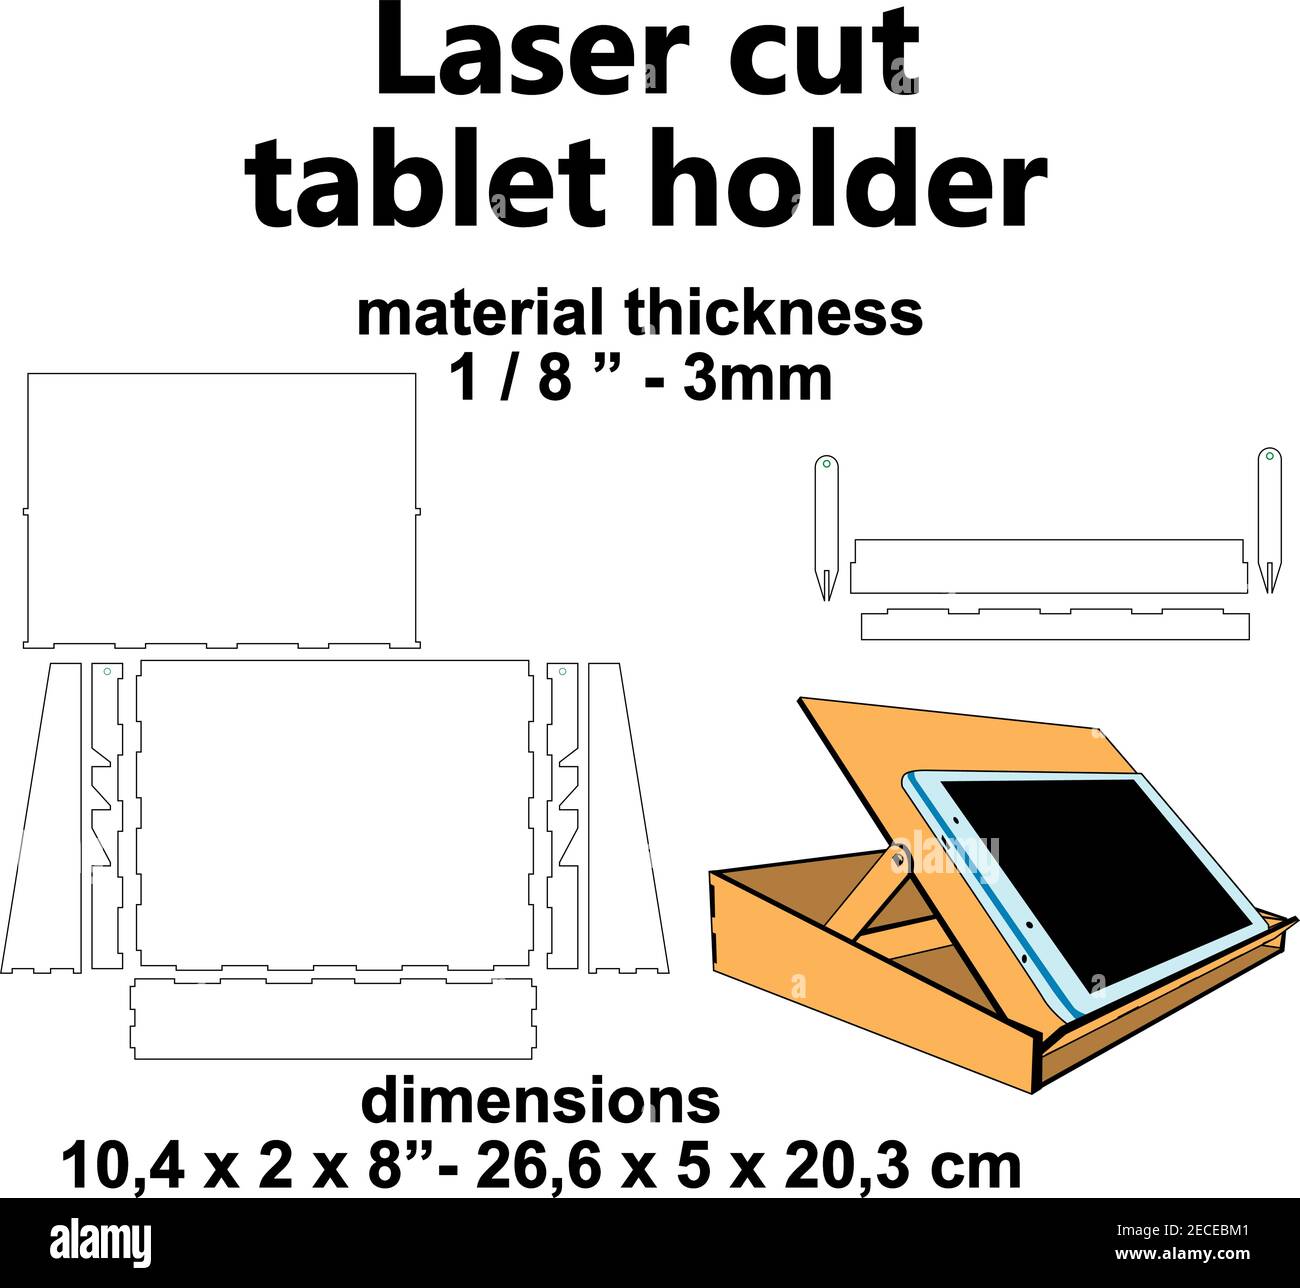 Laserschneiden Laser schneiden Papier Telefon Tablet Ständer Halter Office Liefert Vektor Vorlage Muster Holz Sperrholz mdf Acryl Design Stock Vektor